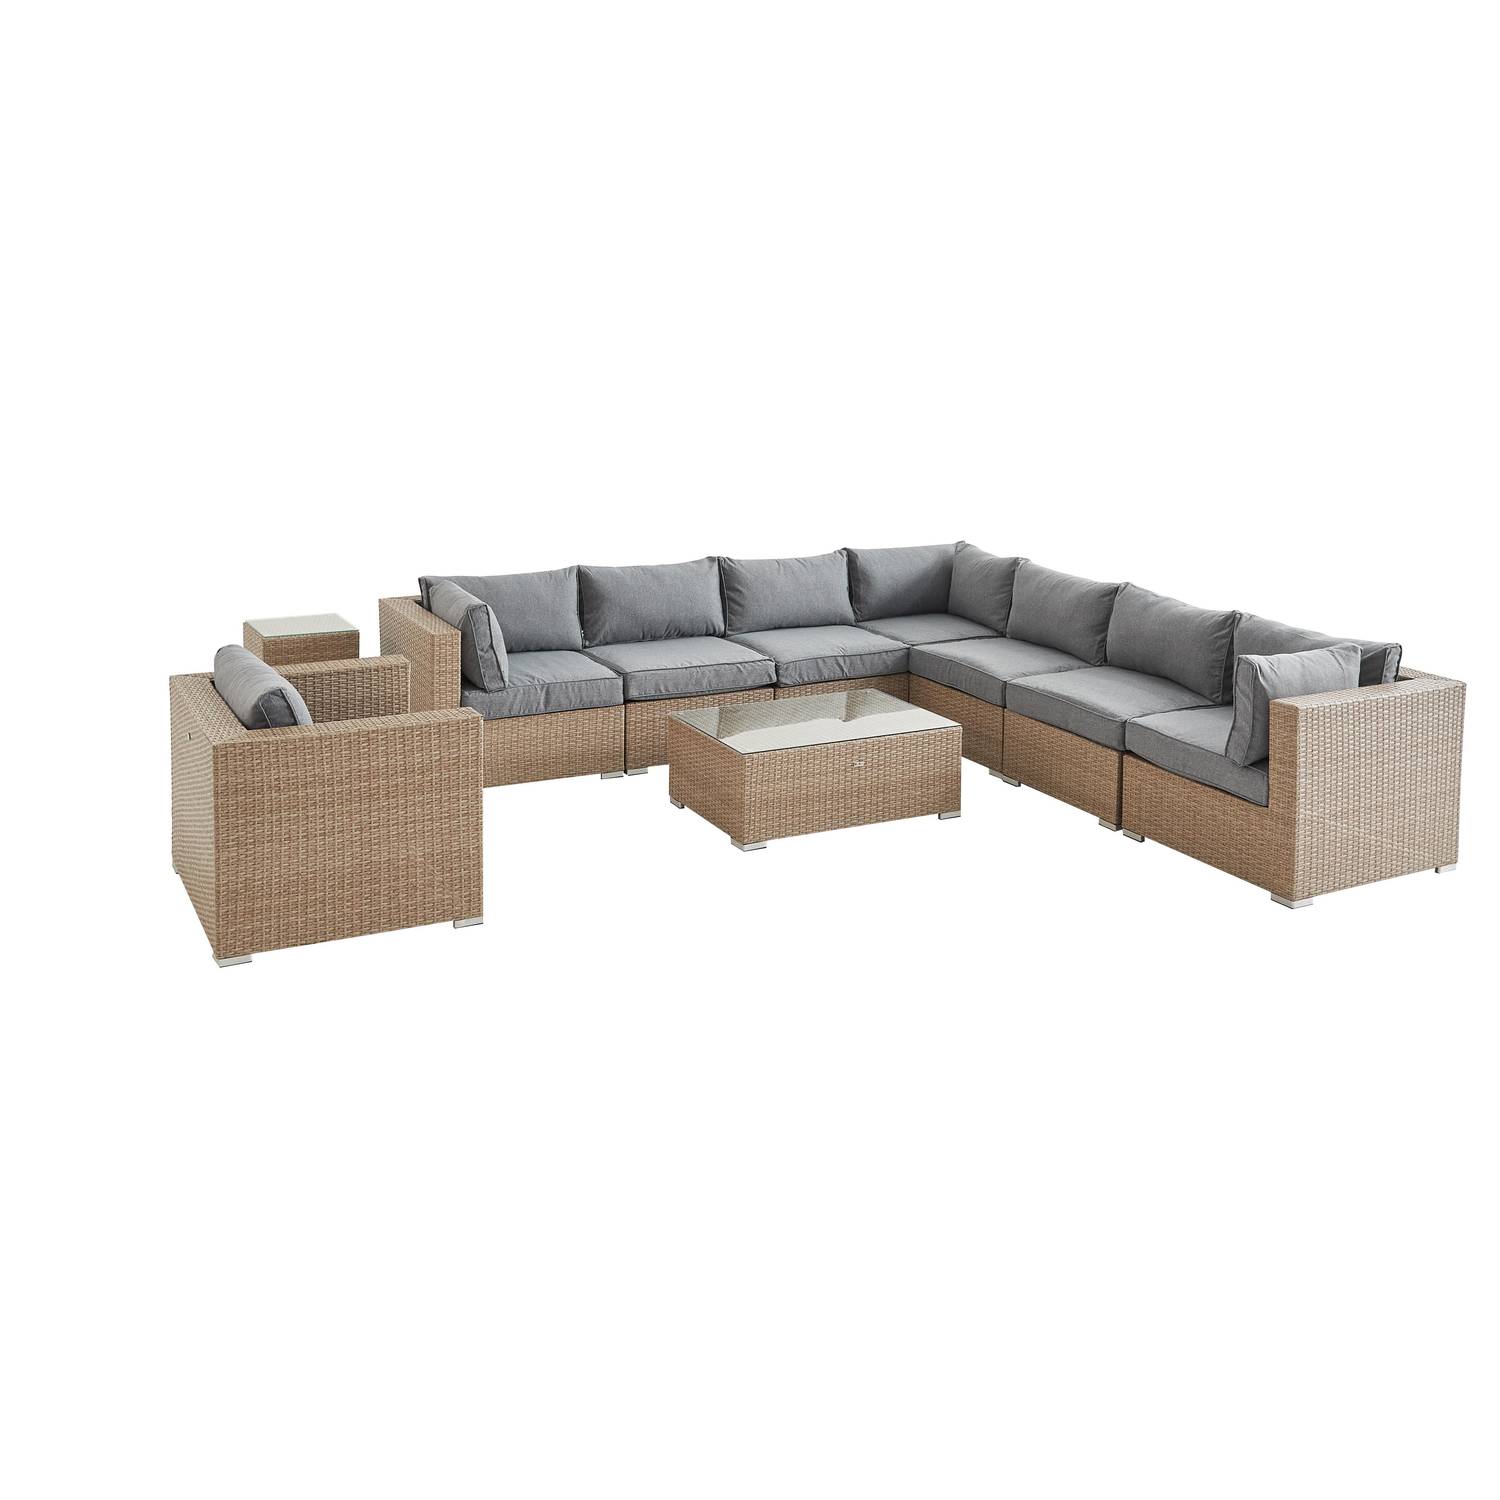 Ready assembled 10-seater polyrattan corner garden sofa set - sofa, armchair, coffee table - Venezia - Beige / Grey Photo2